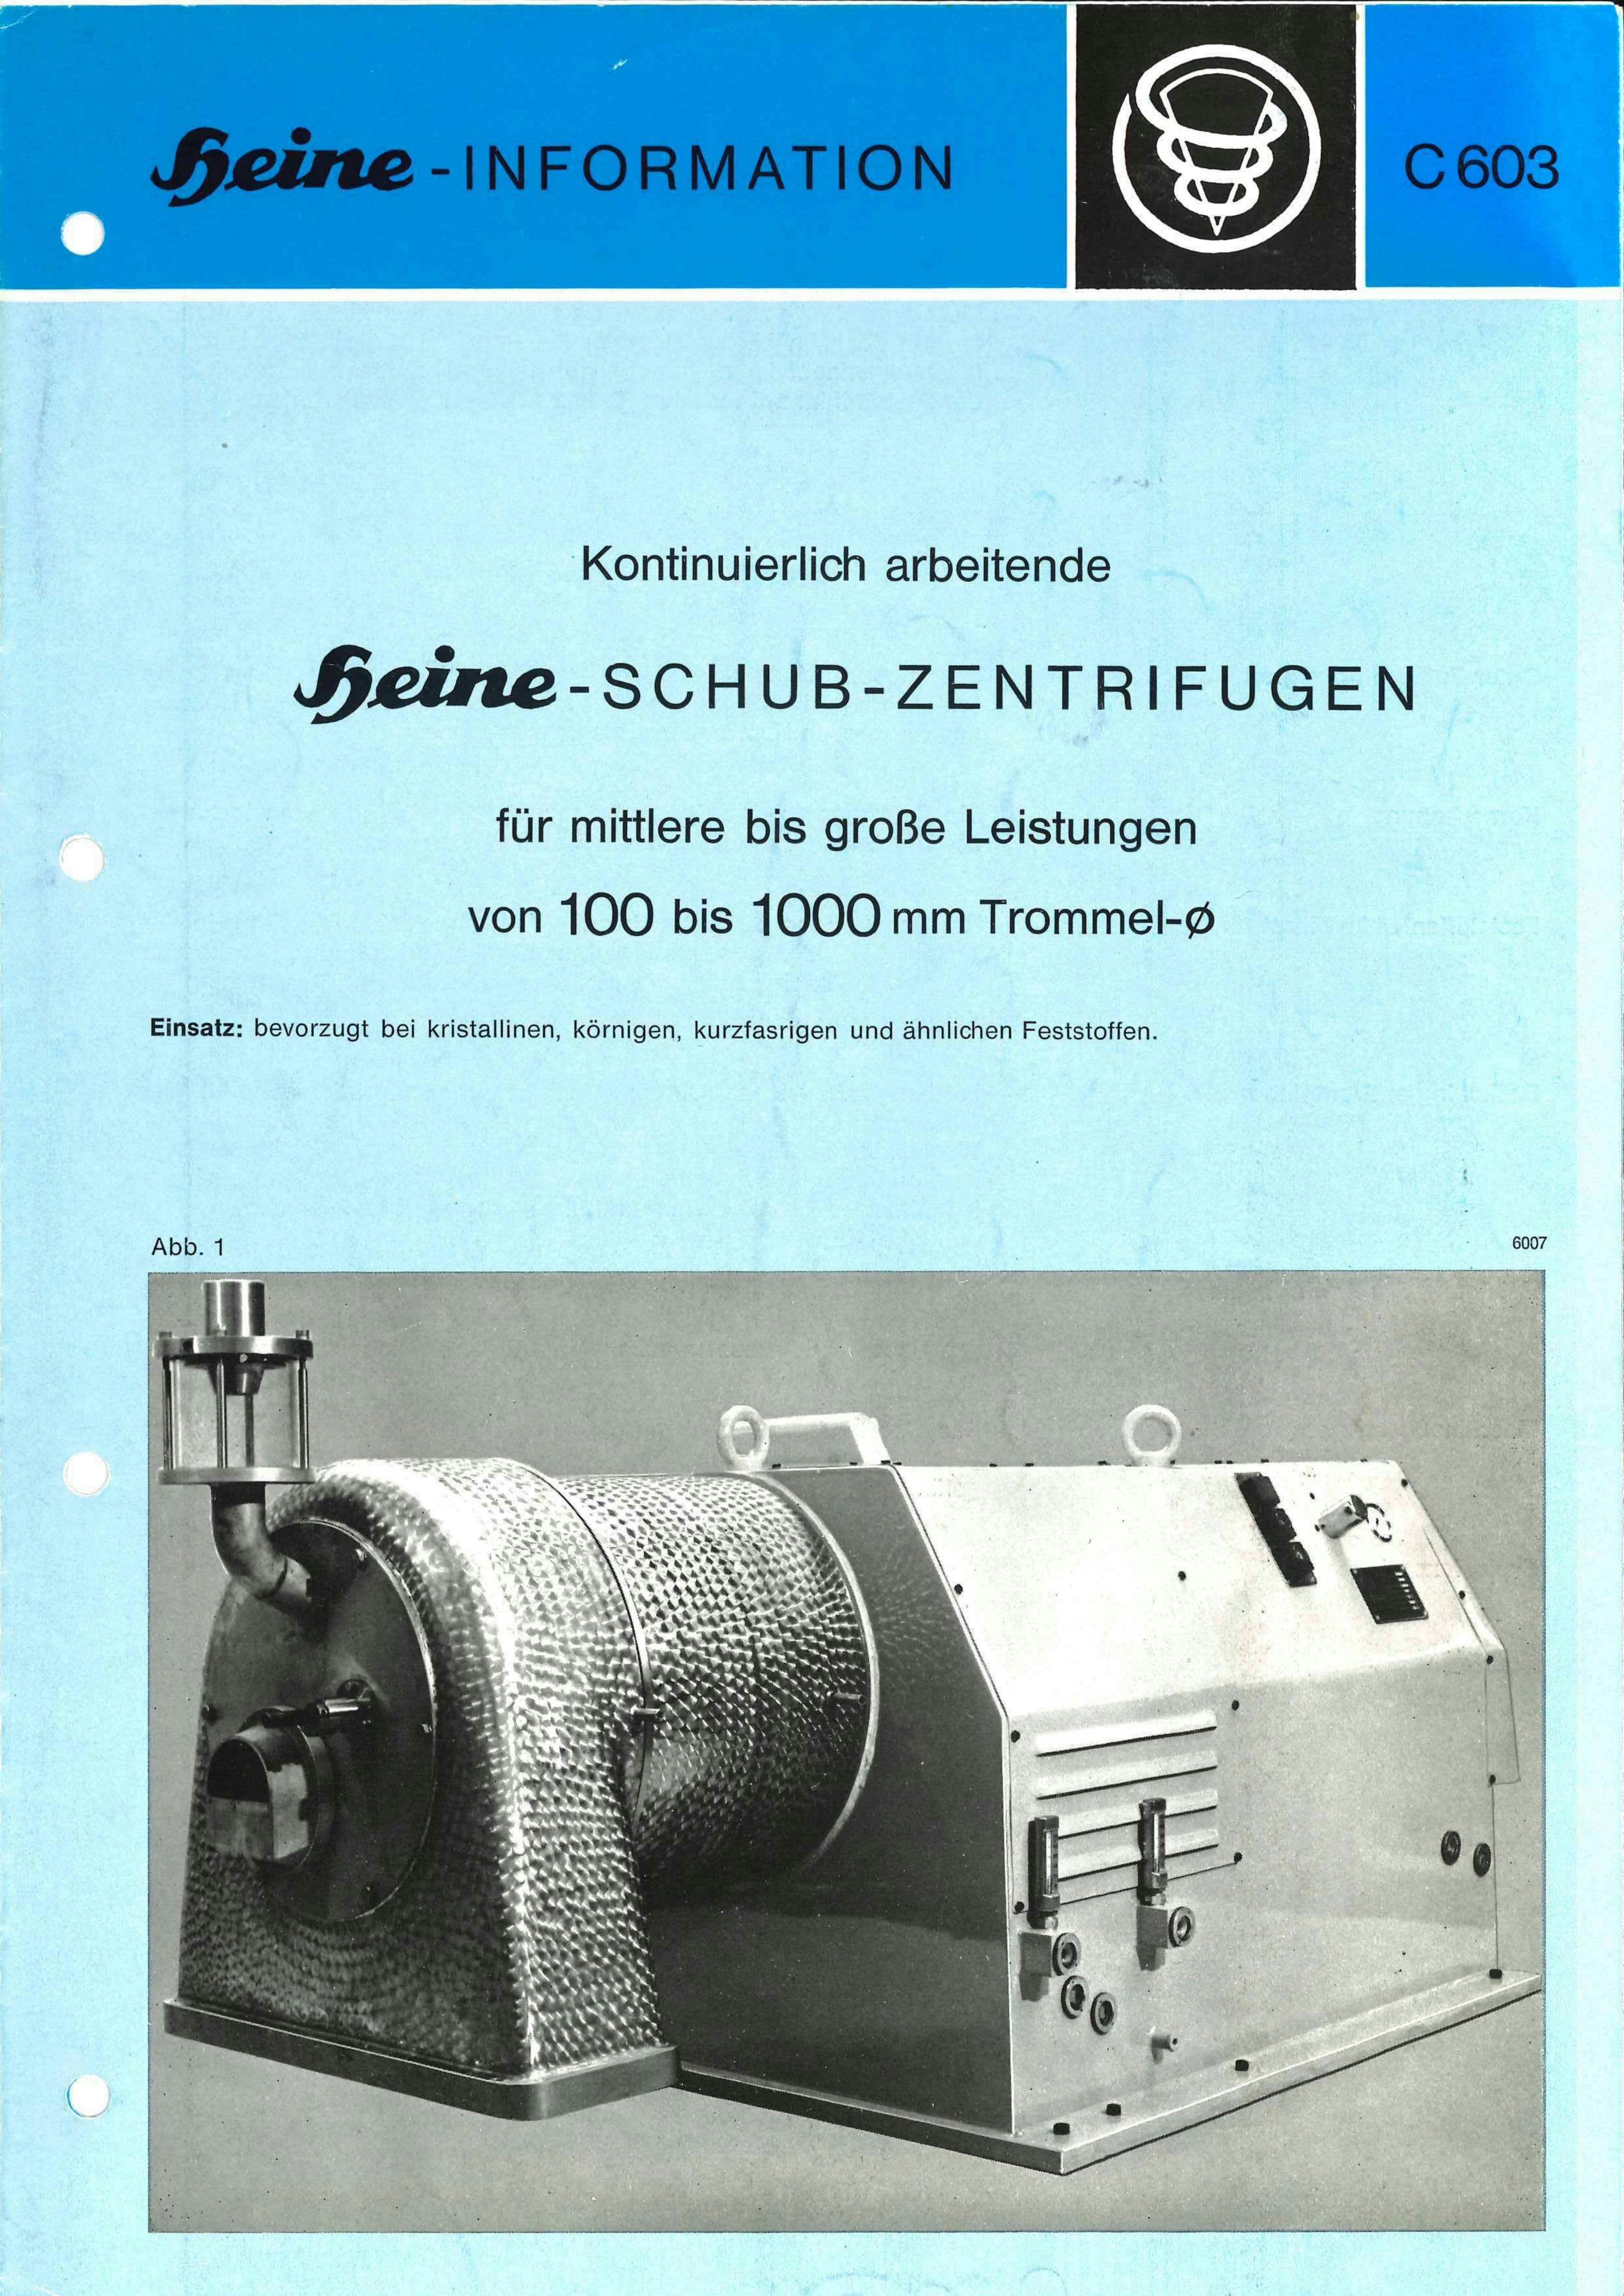 Heine Zentrifug 606 - Centrifuga a spinta - image 12